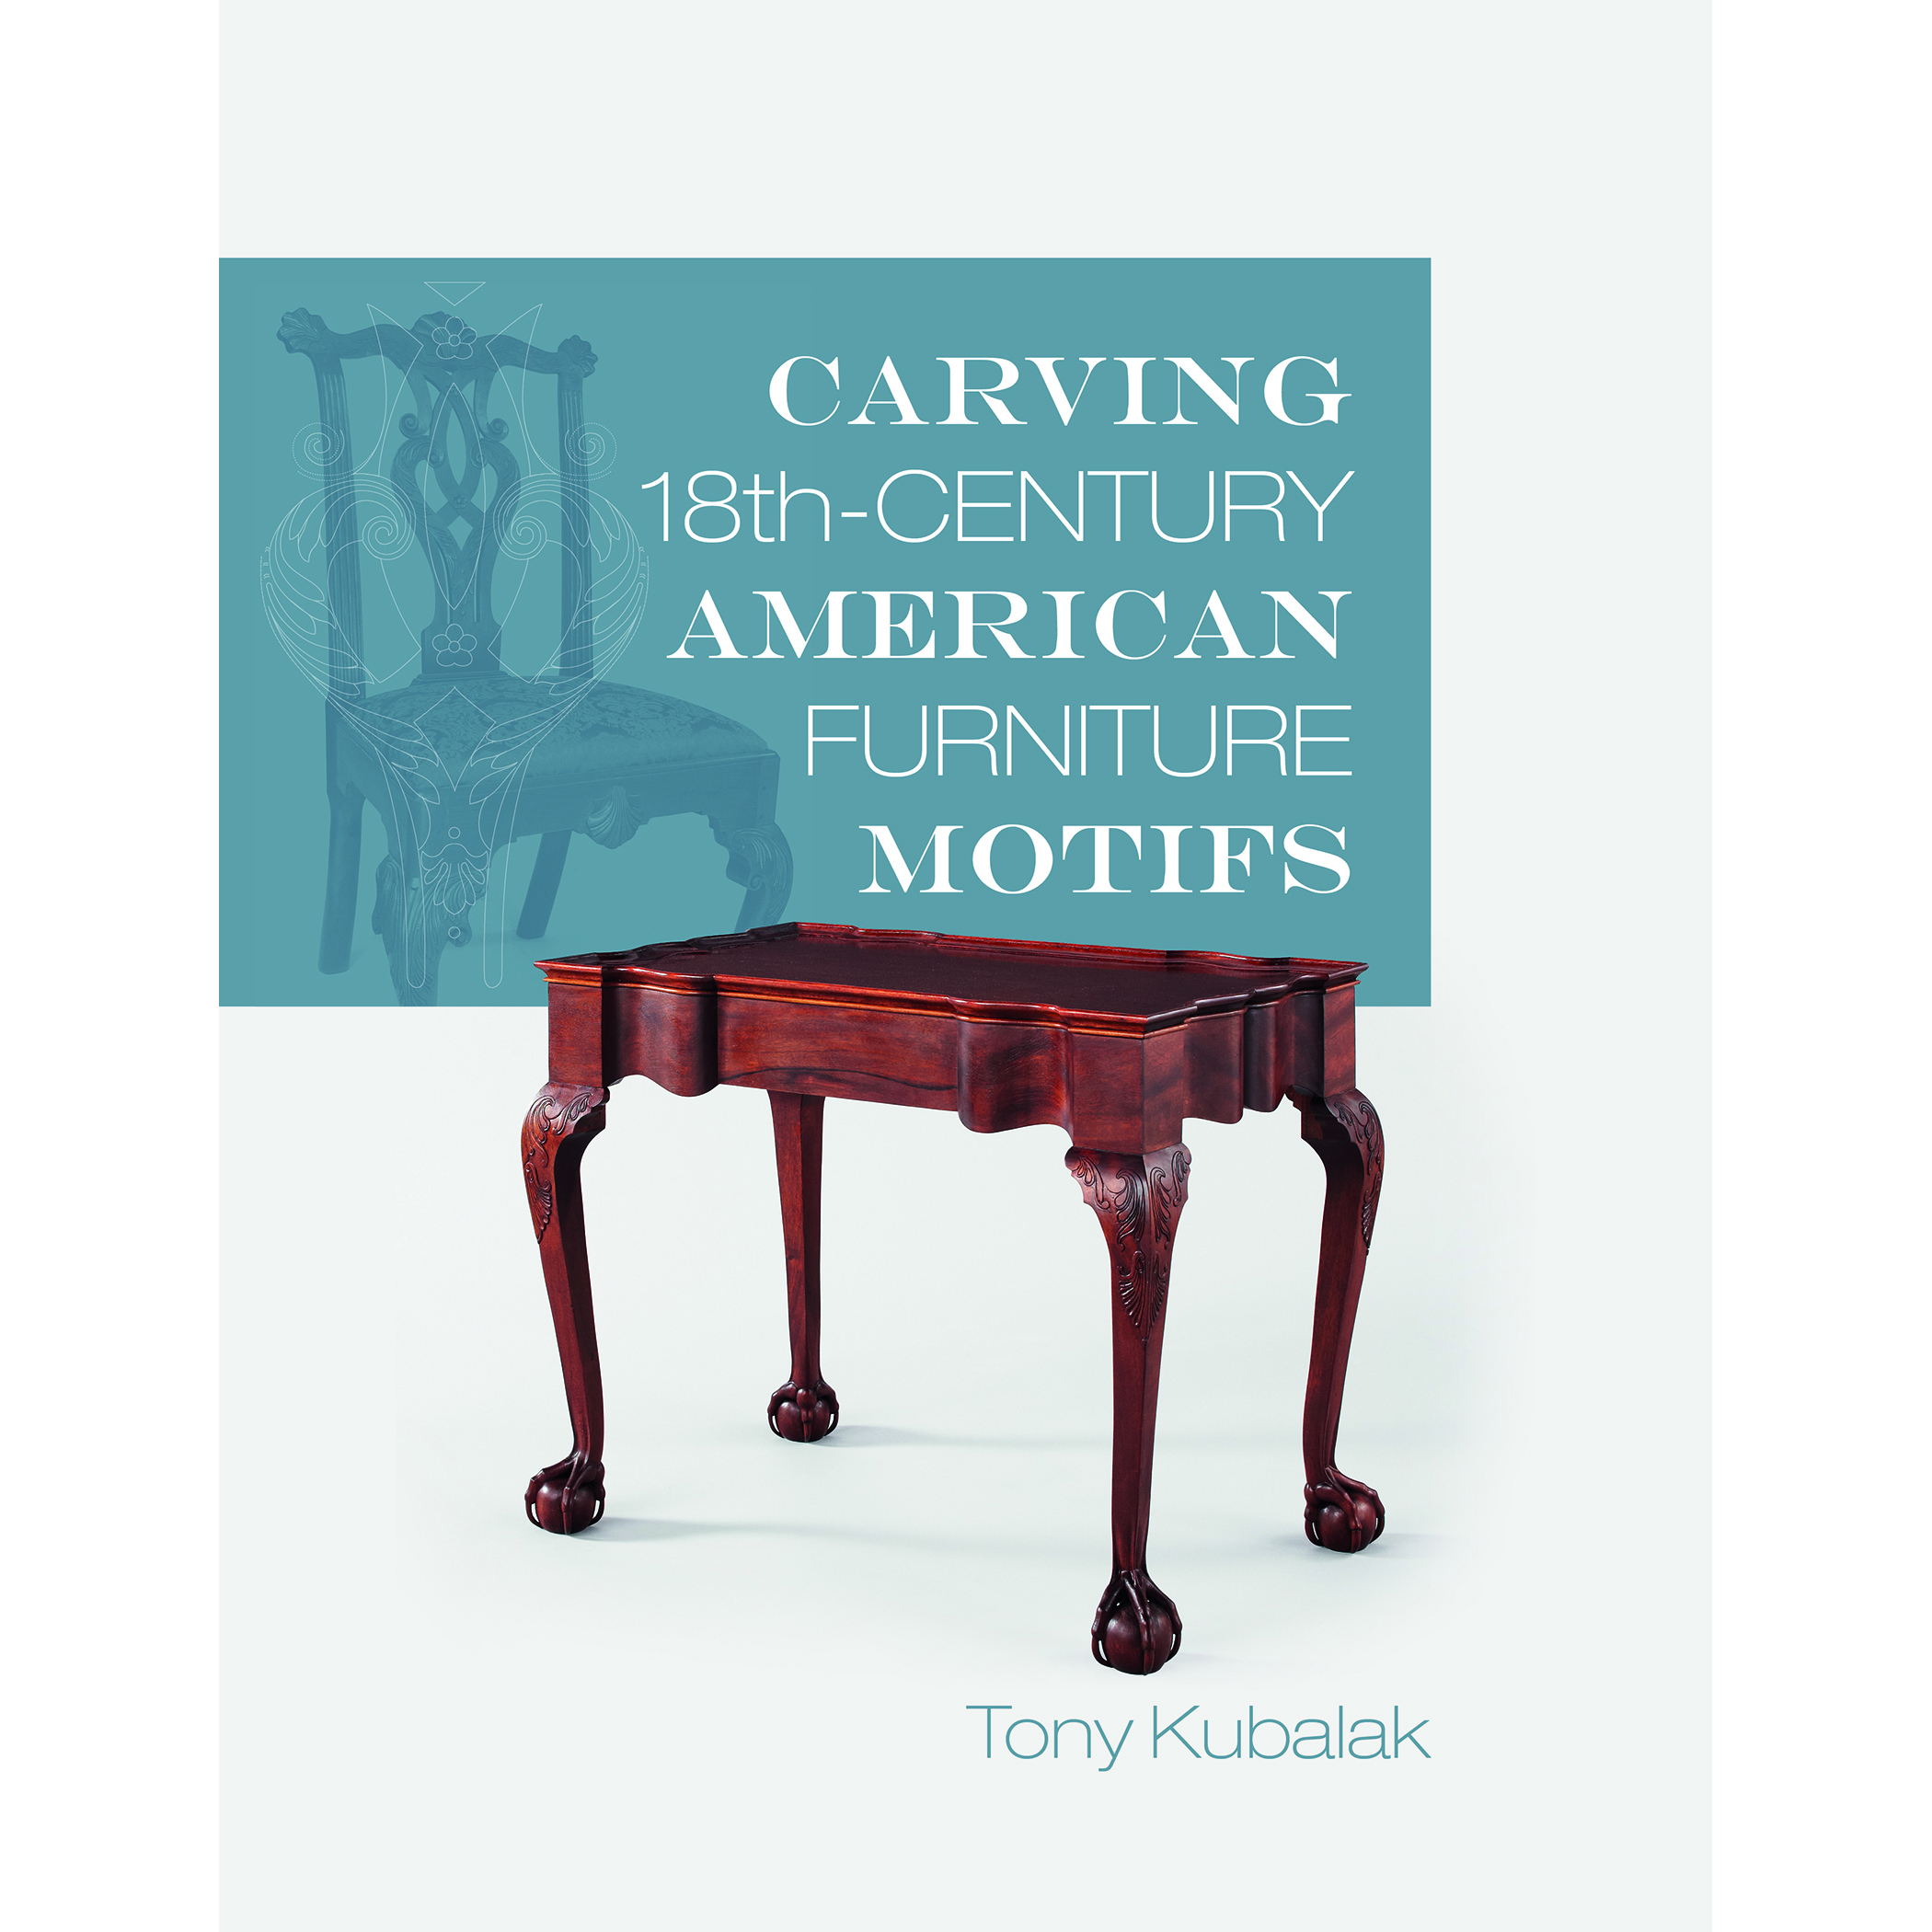 Carving 18th-century American Furniture Motifs